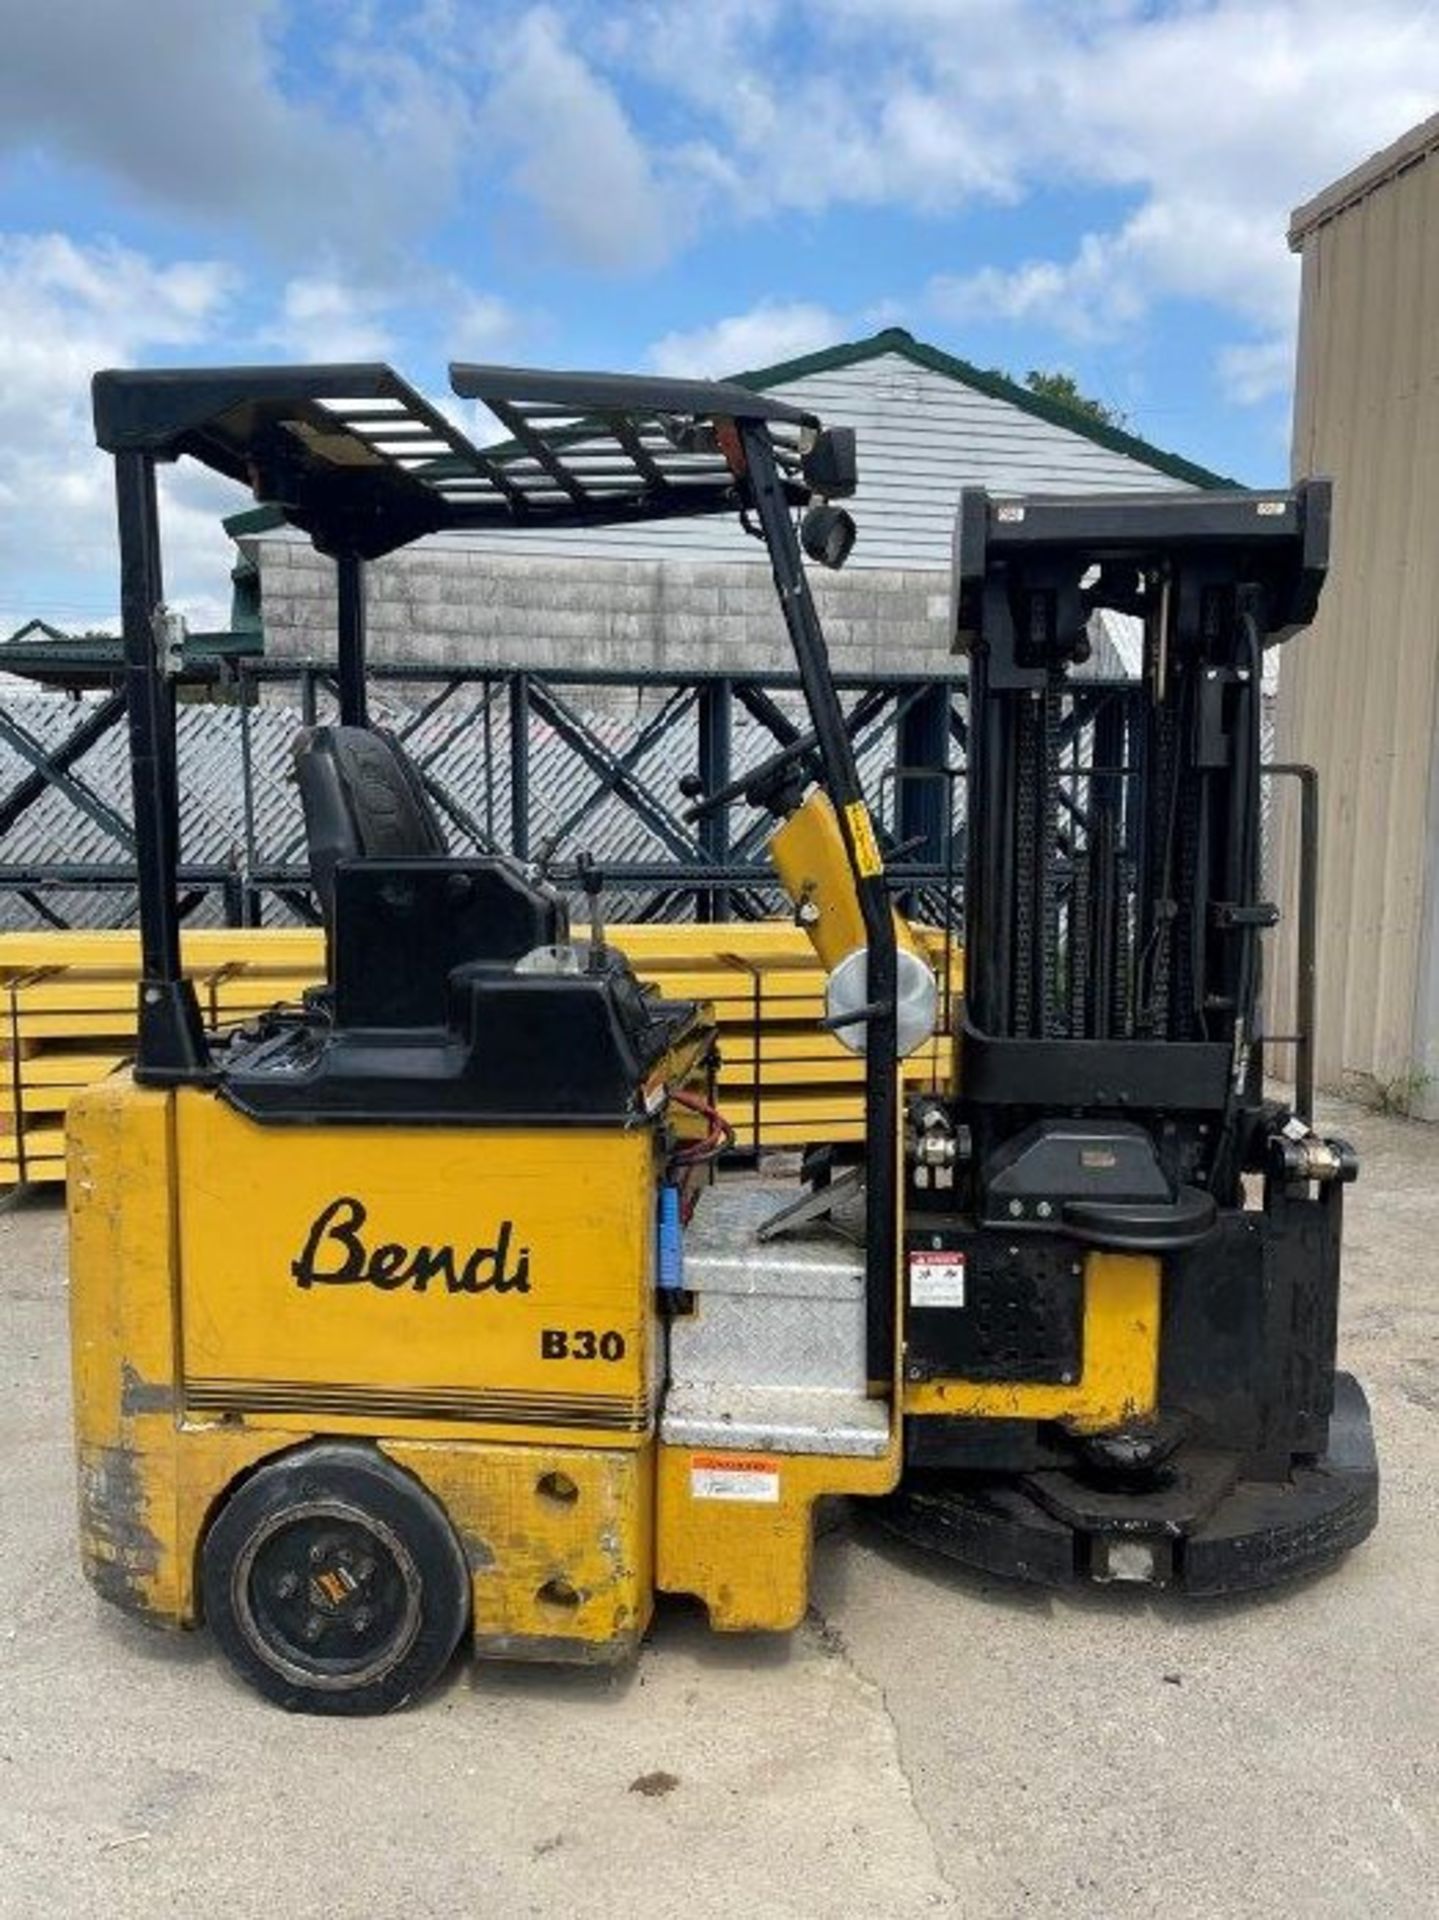 Landoll Bendi B30 Rear Wheel Drive Narrow Aisle Electric Forklift - Image 11 of 13